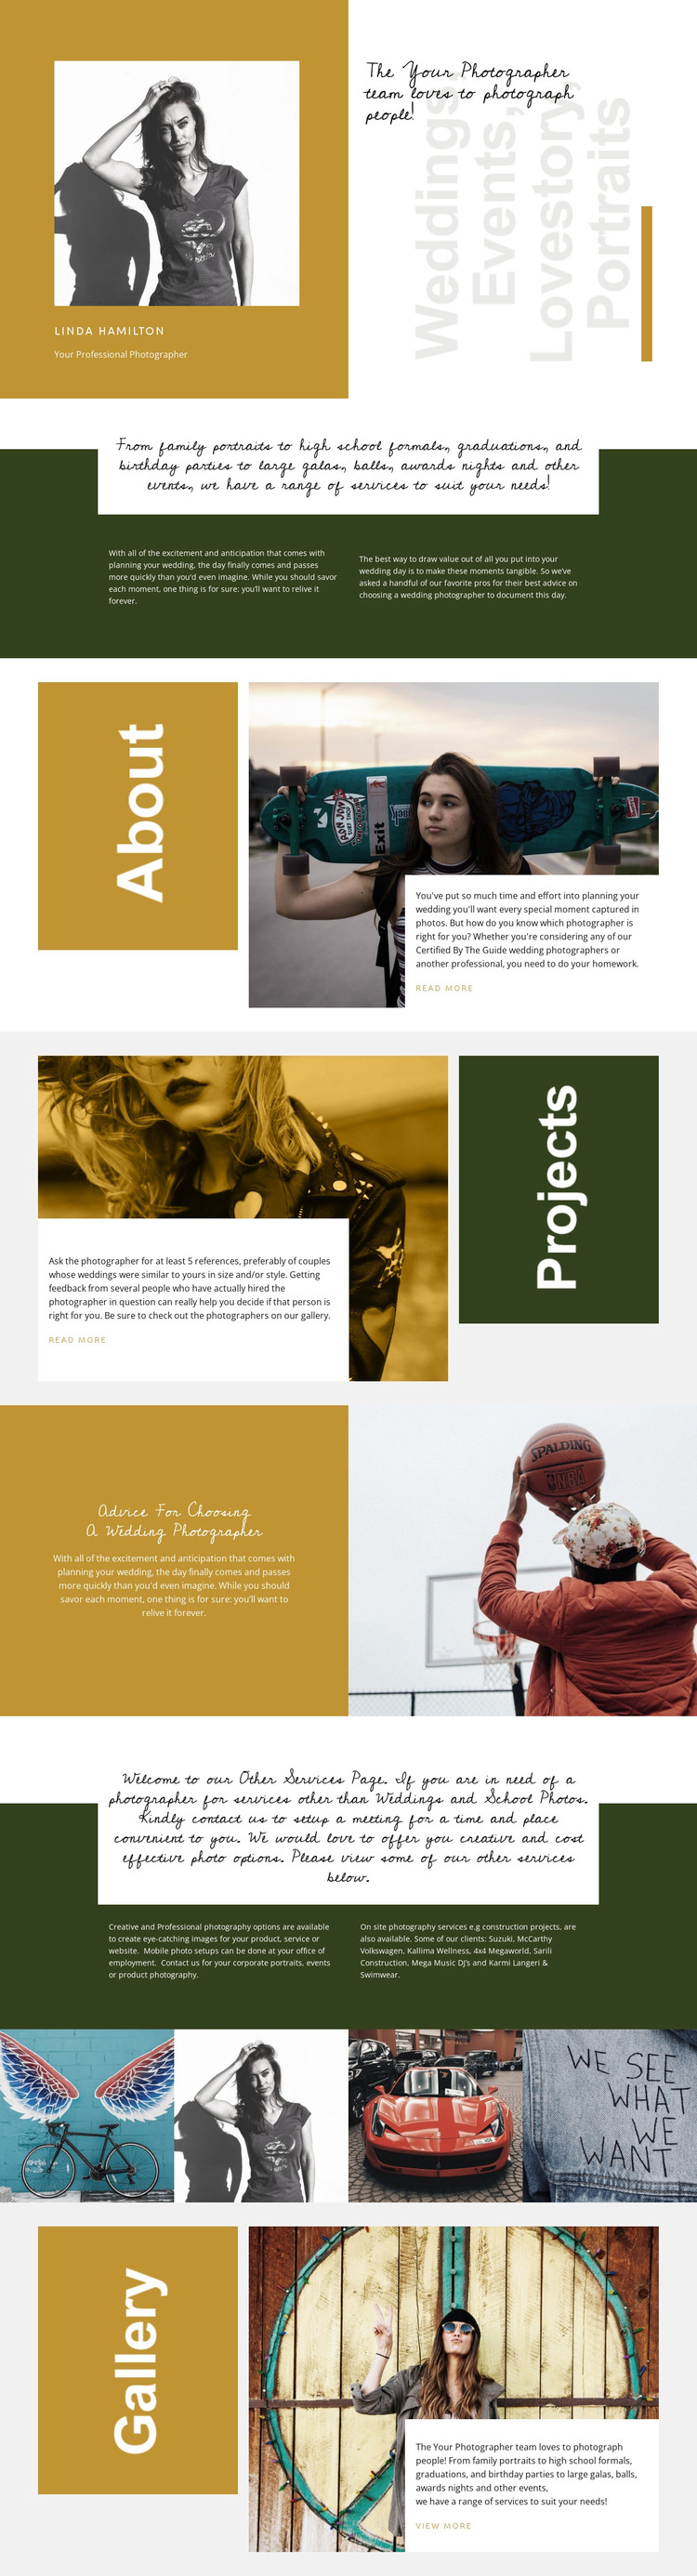 Fashion photography courses WordPress Theme